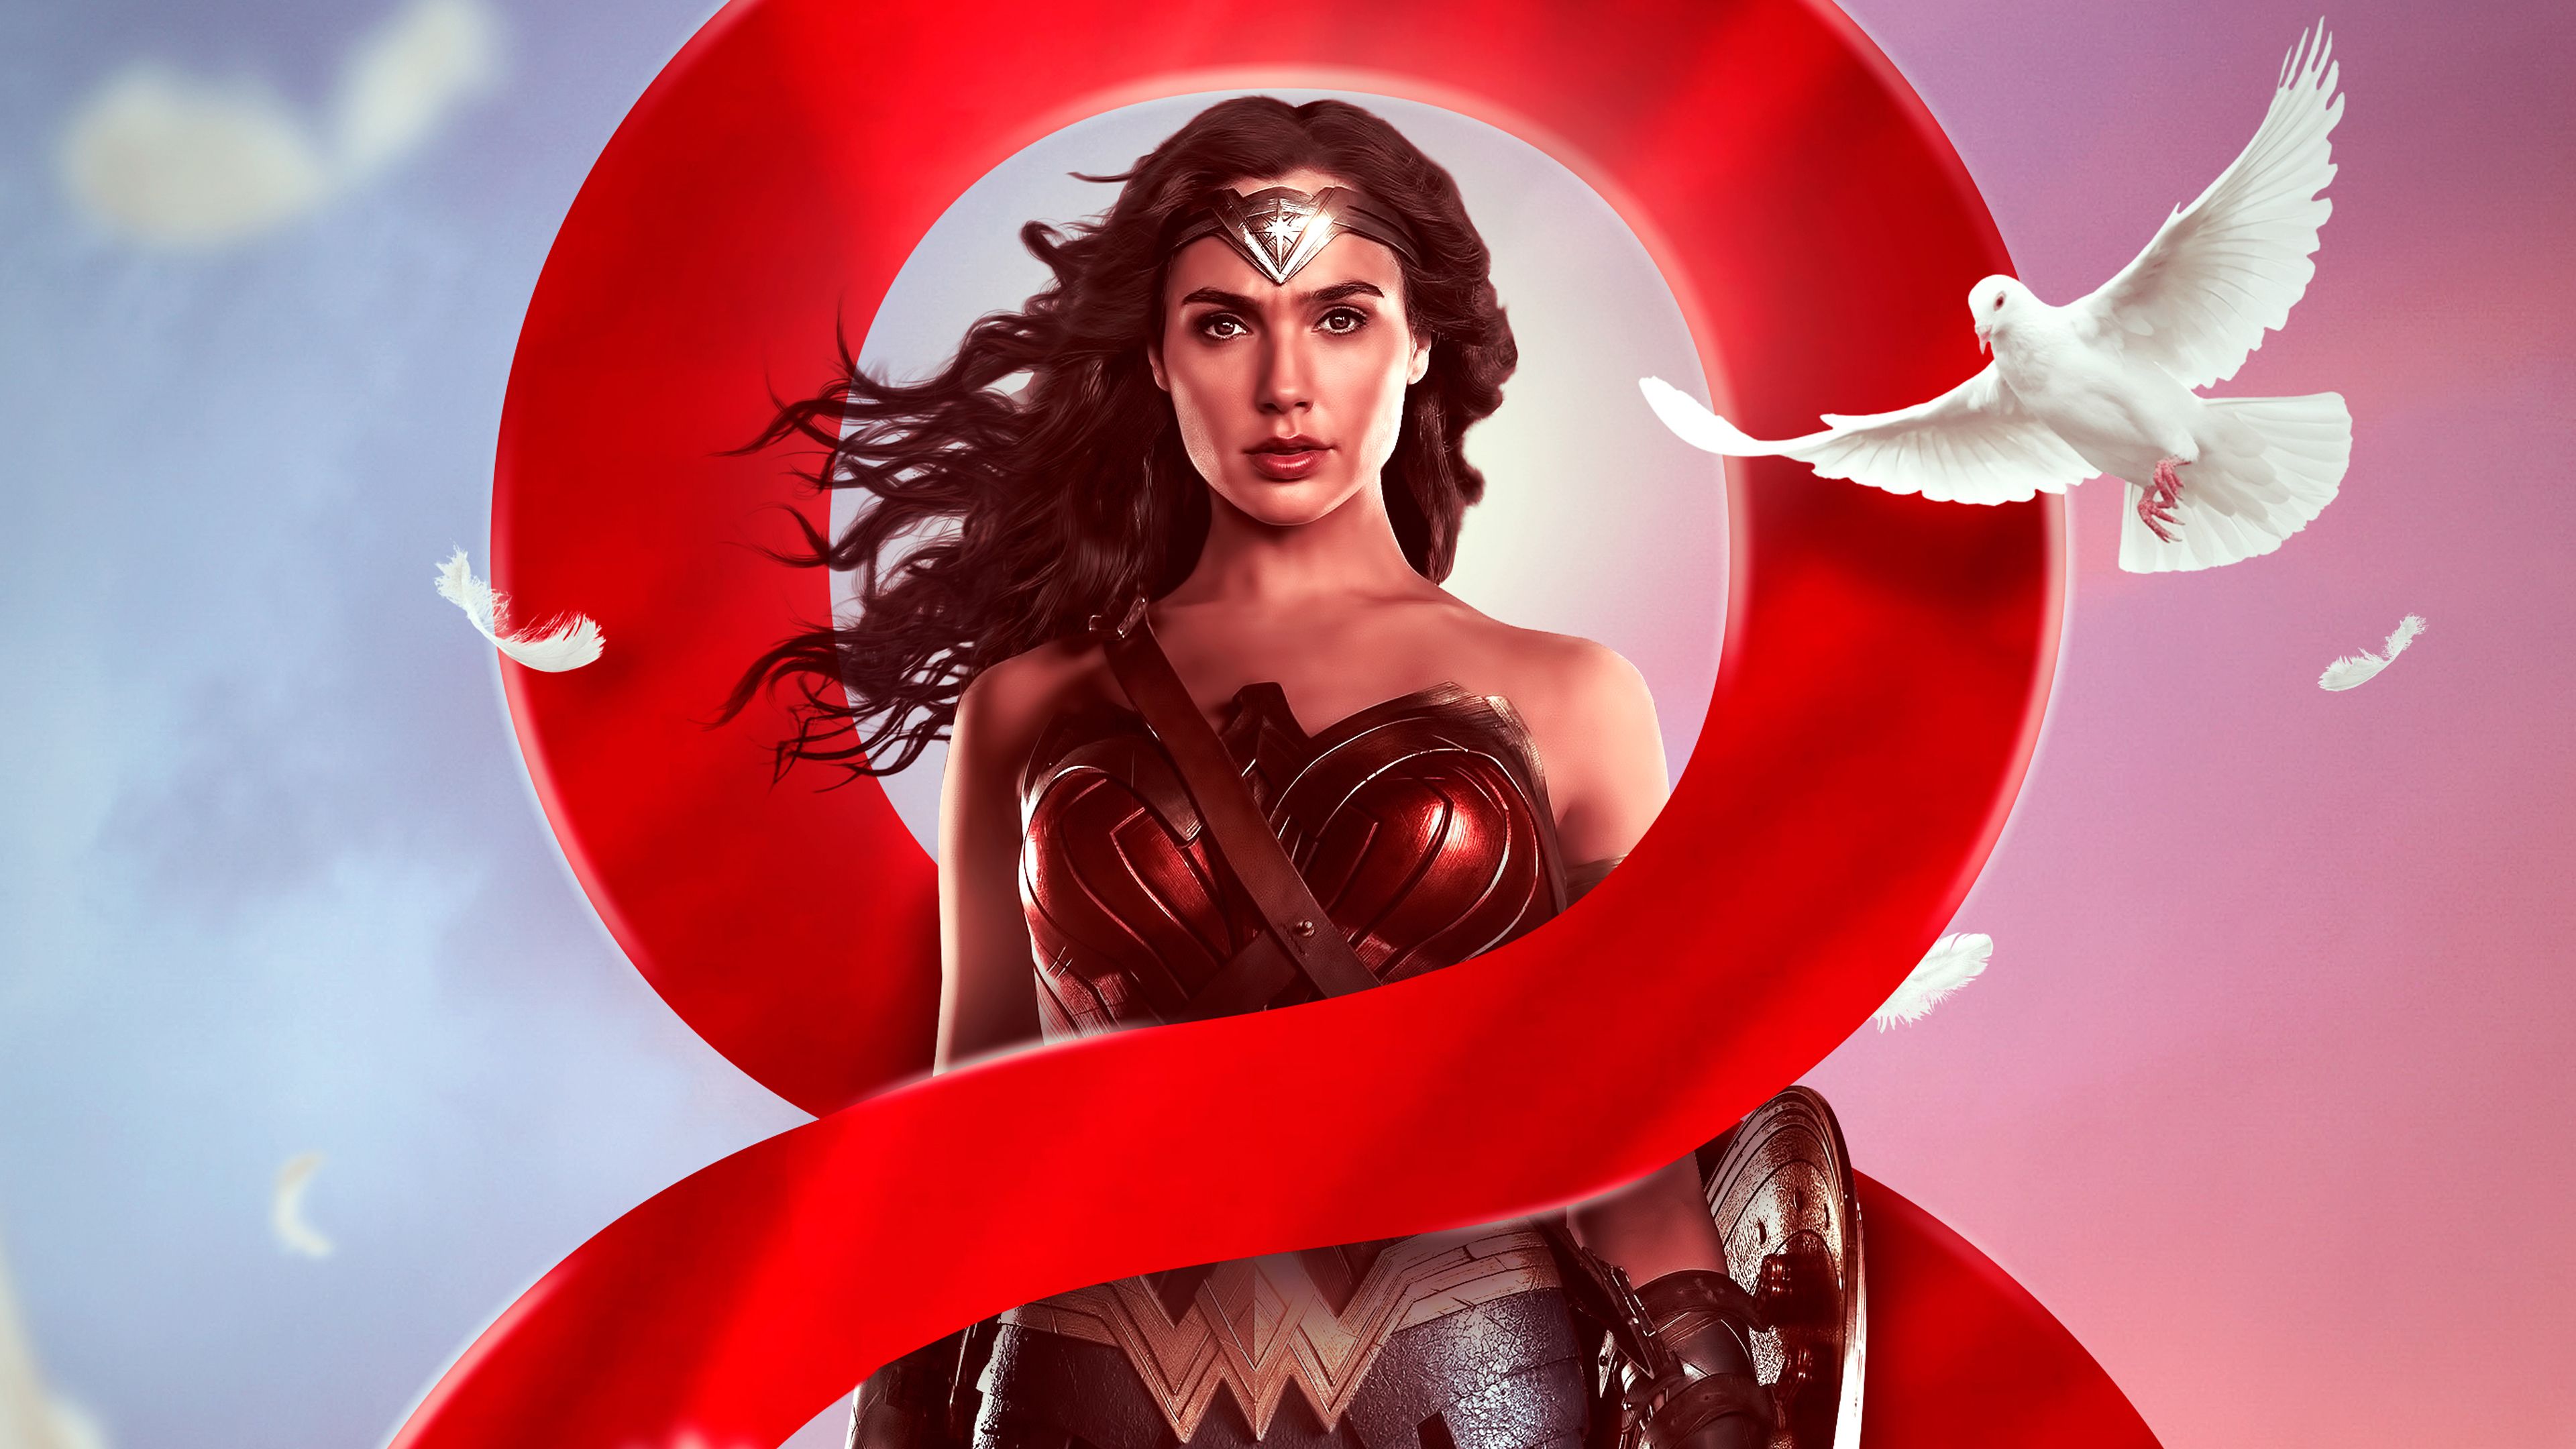 Wallpaper 4k Wonder Woman Poster Design 4k Wallpaper